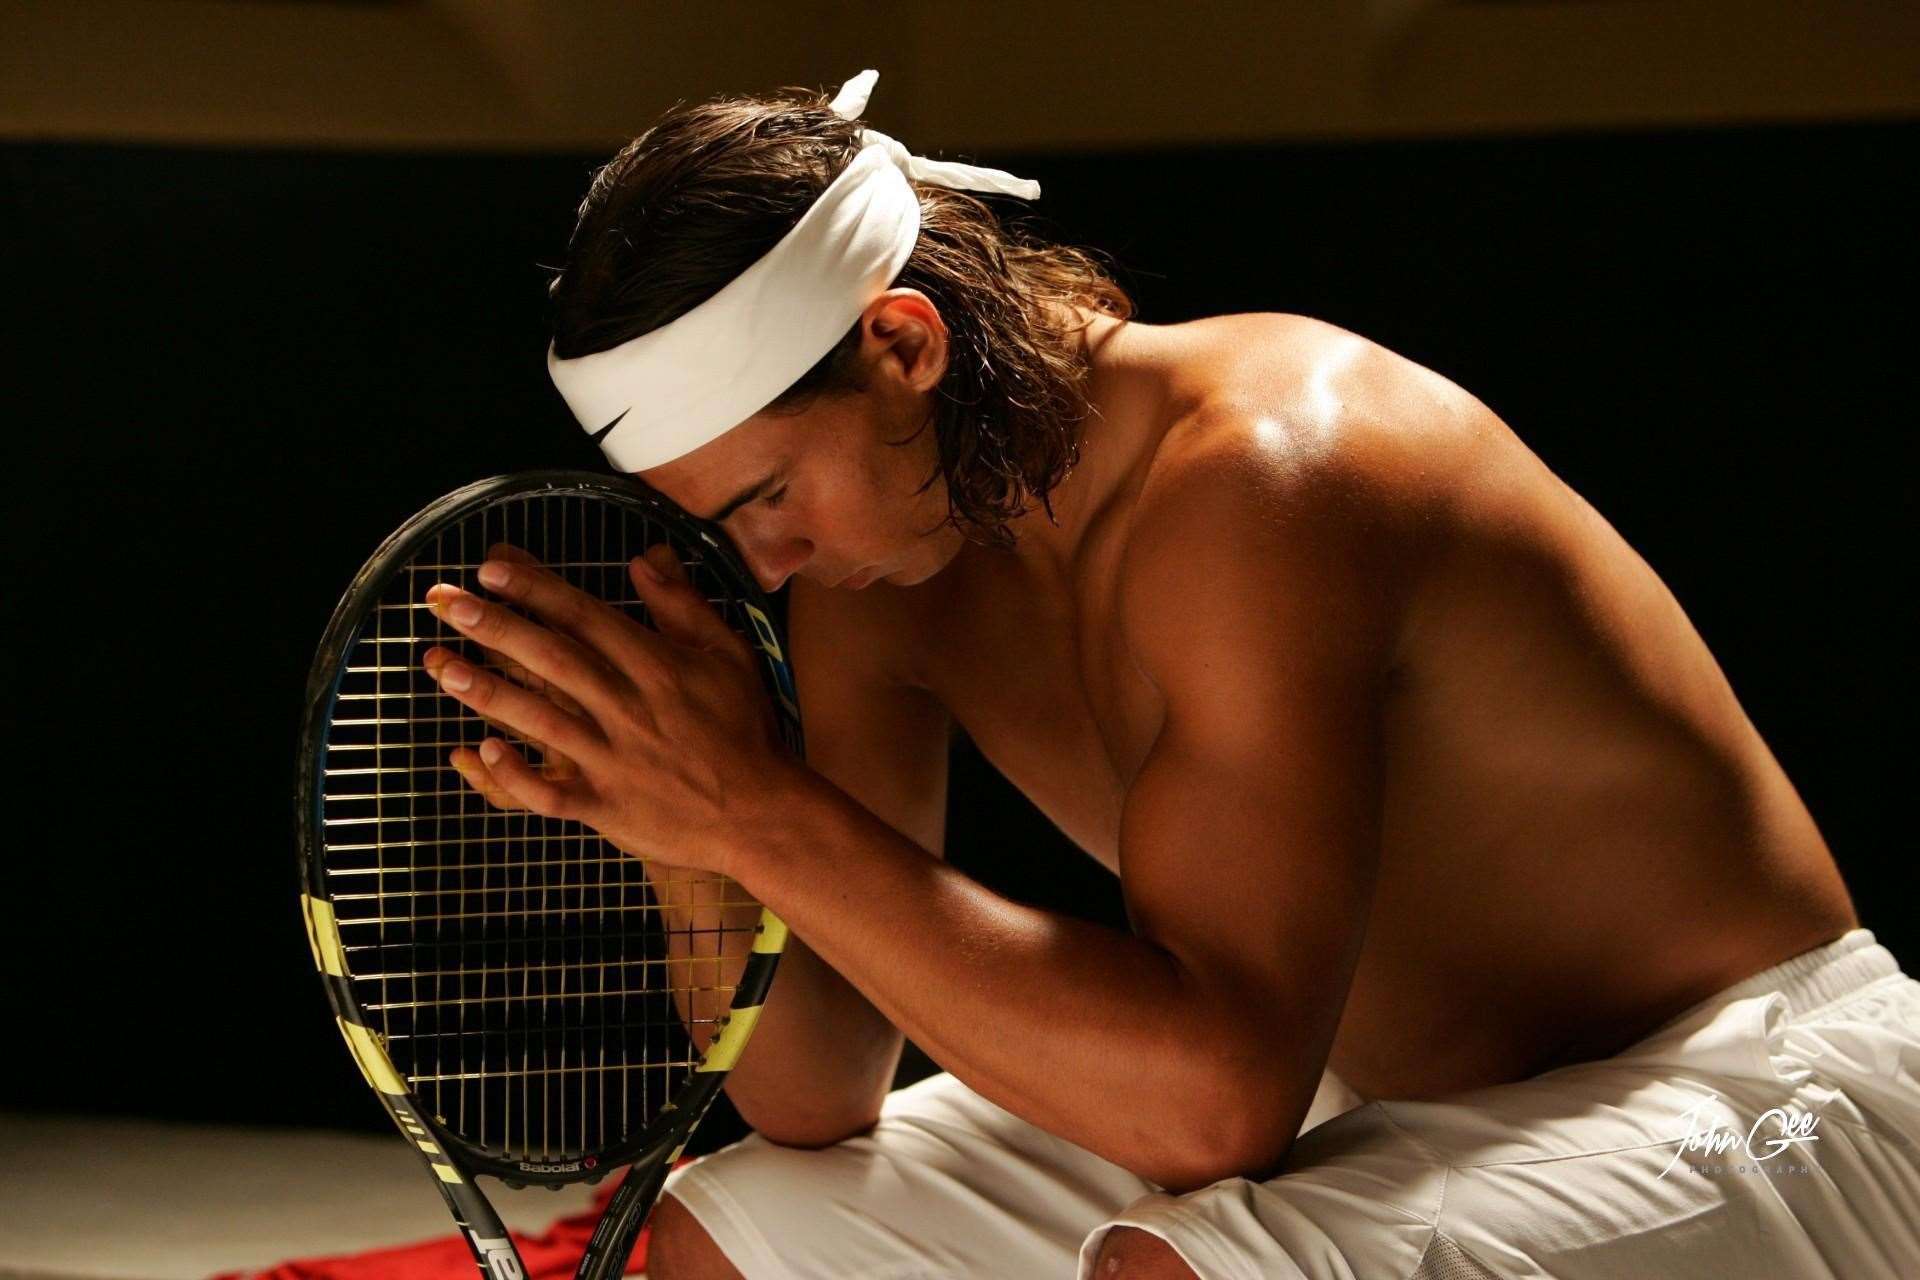 Tennis star Rafa Nadal in deep contemplation Pic: John Gichigi/Getty Images